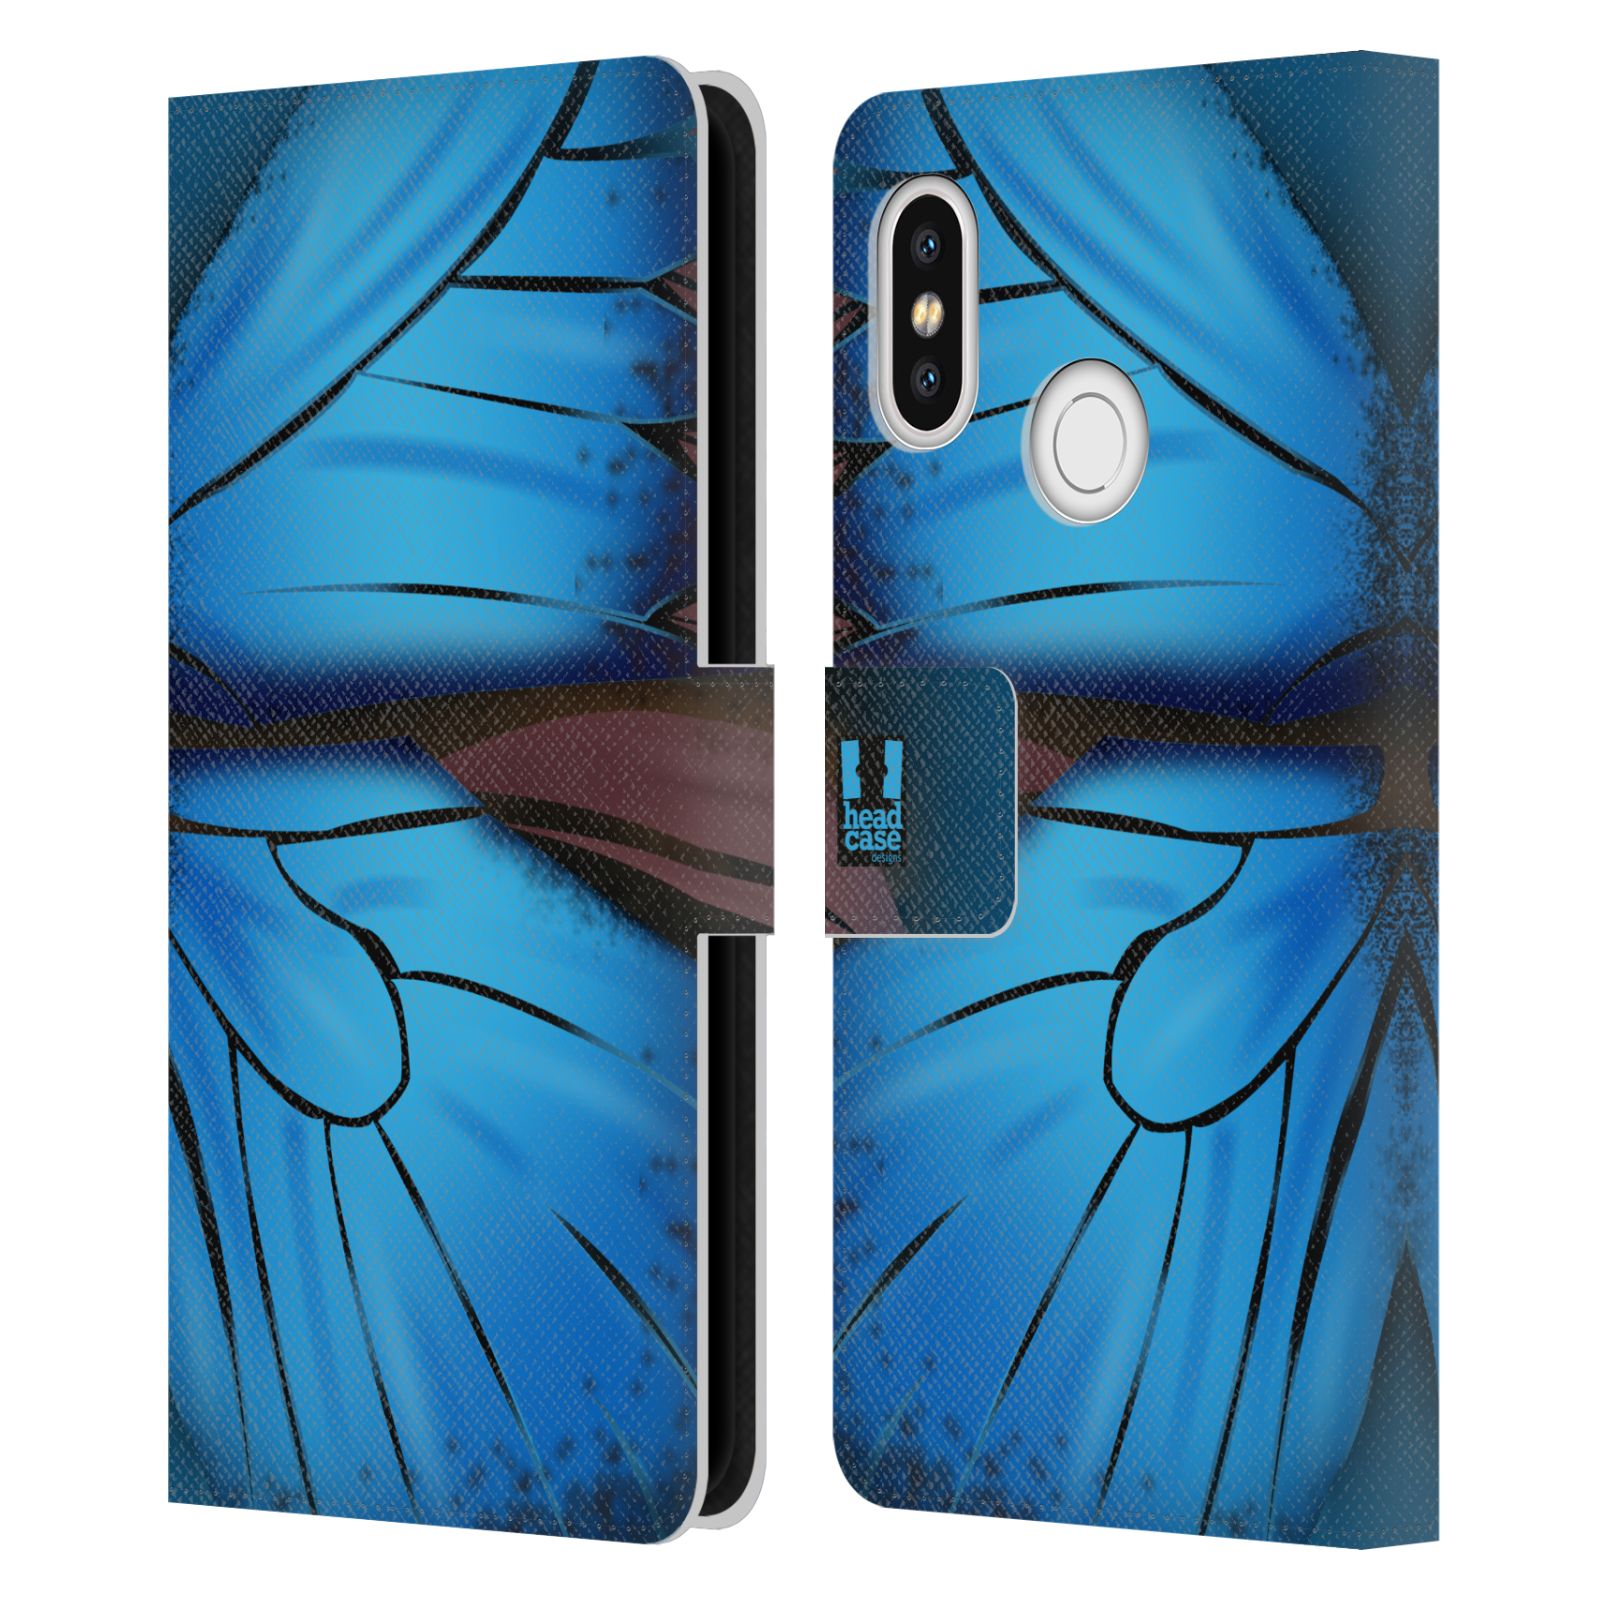 HEAD CASE Flipové pouzdro pro mobil Xiaomi Mi 8 motýl a křídla kreslený vzor modrá barva